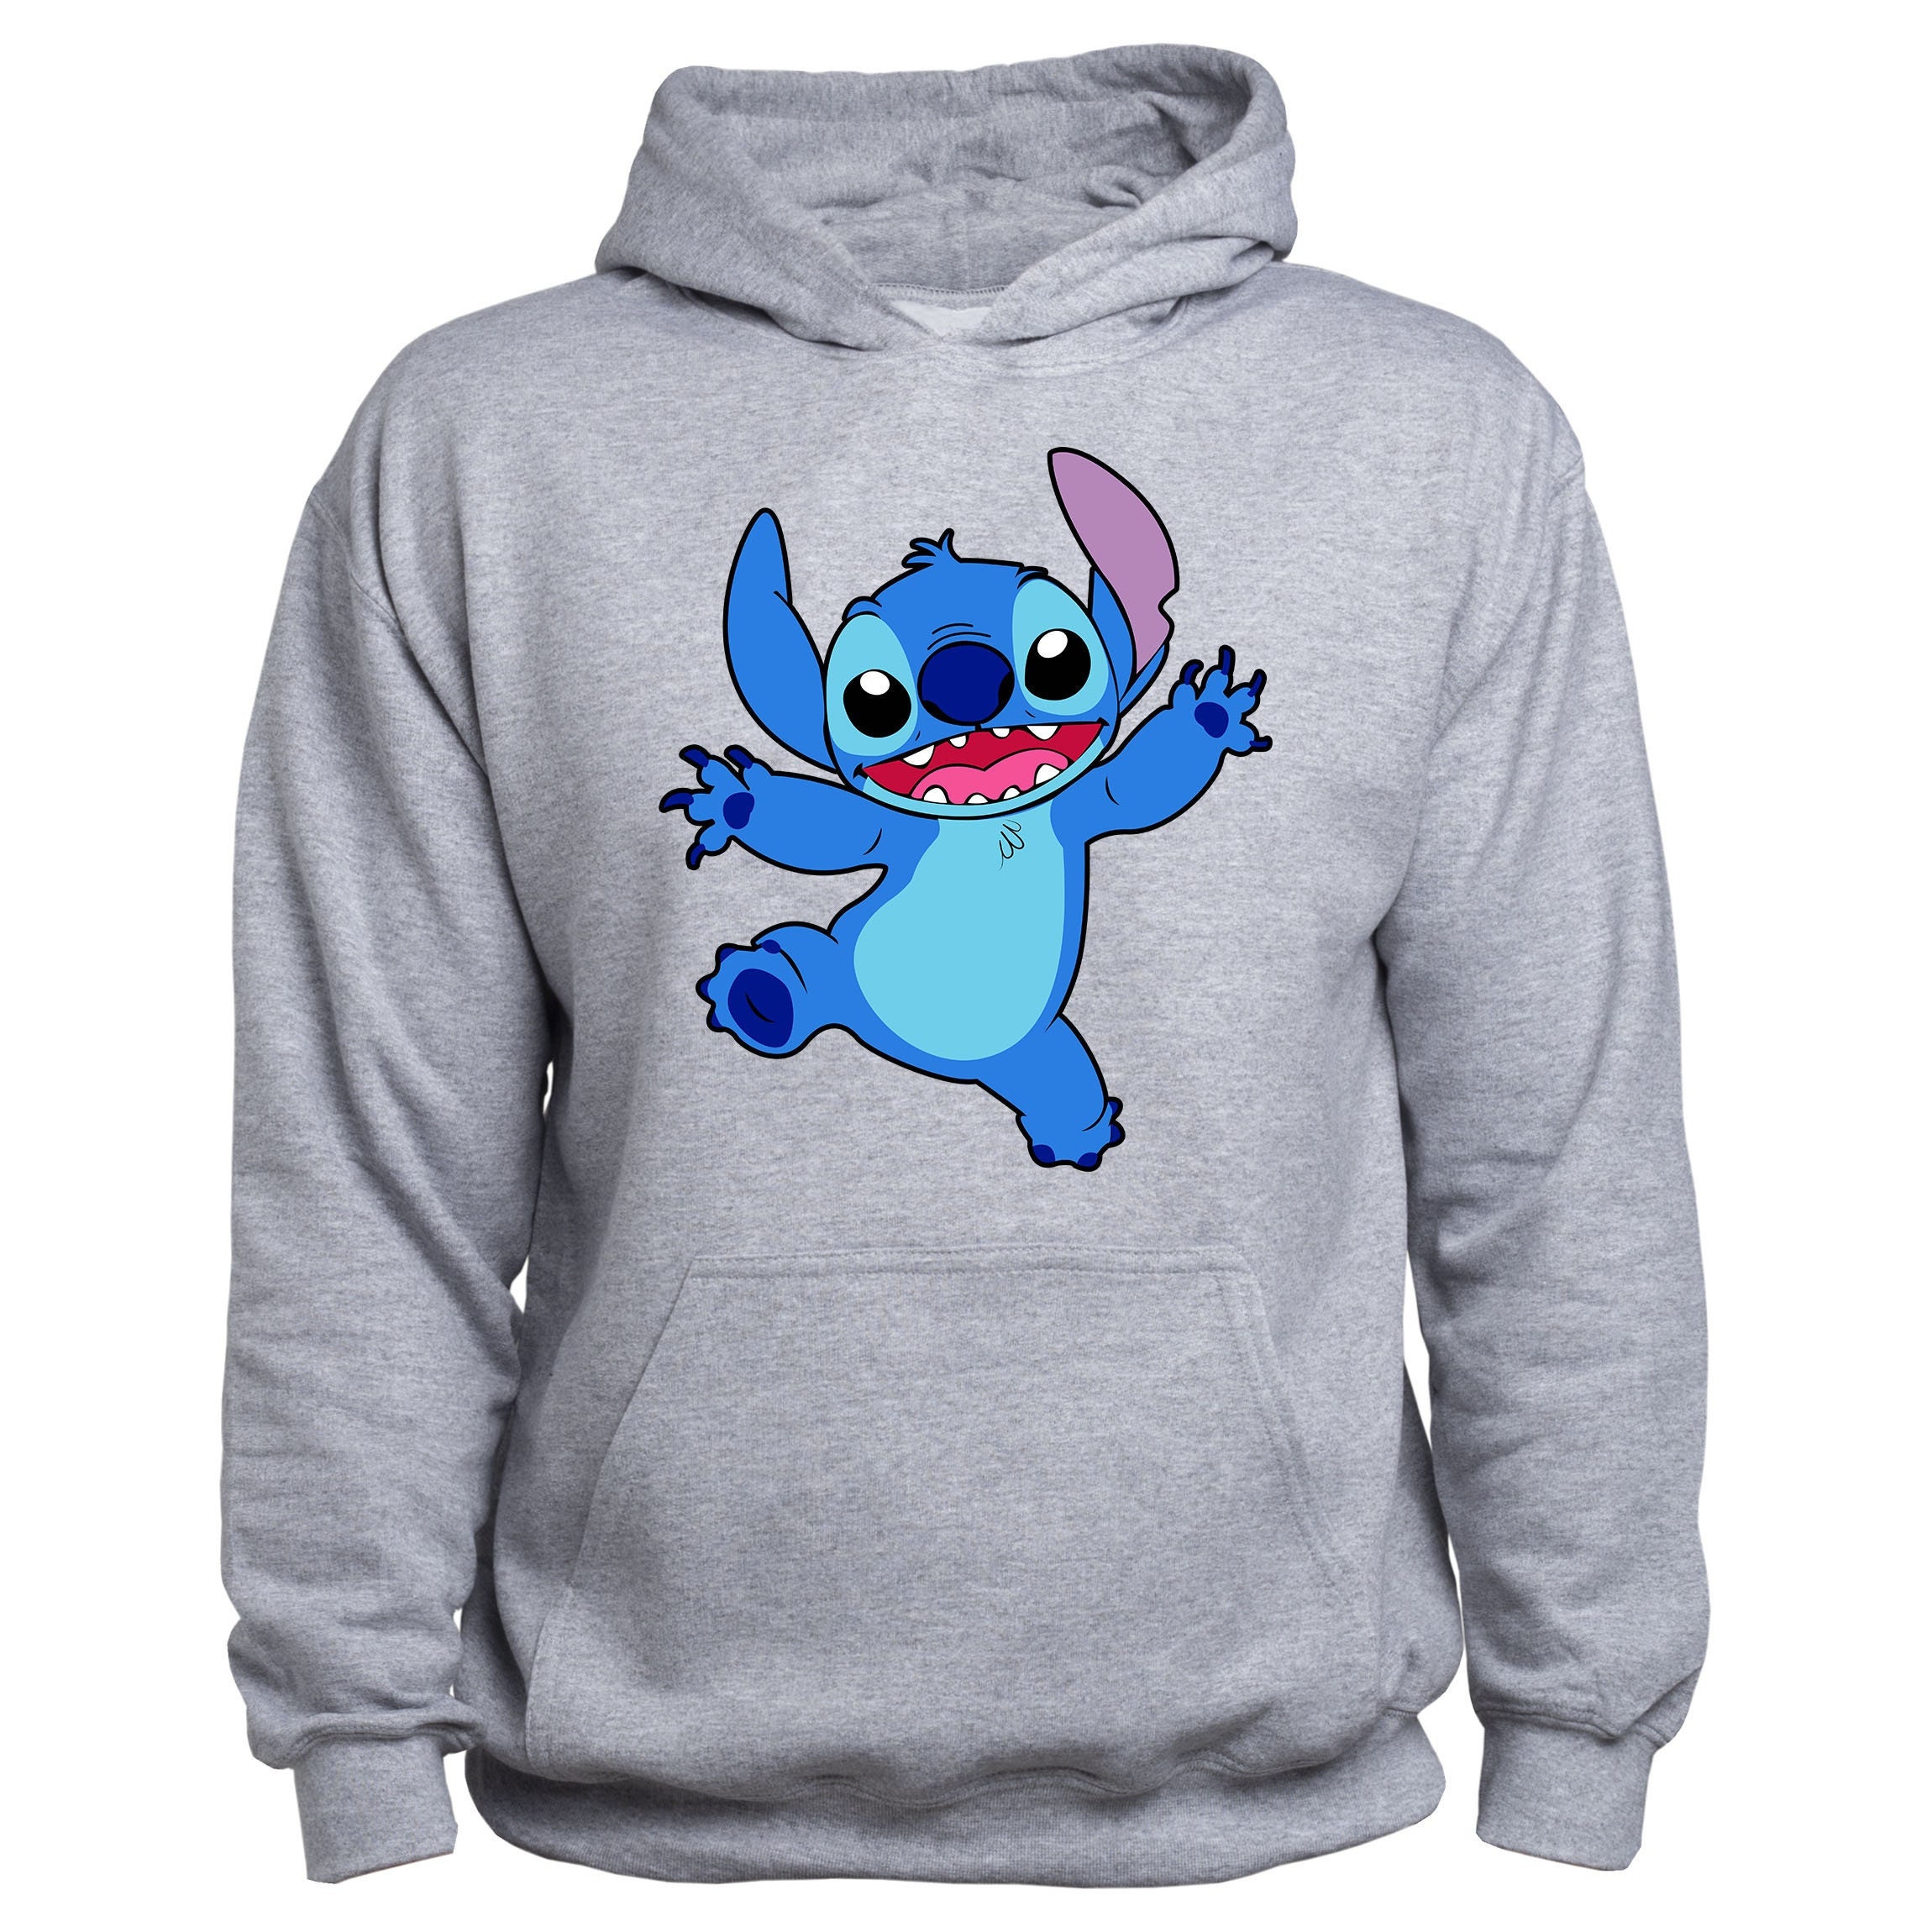 Stitch Youth Sweatshirt, Lilo and Stitch Hoodie for Kid, Disney